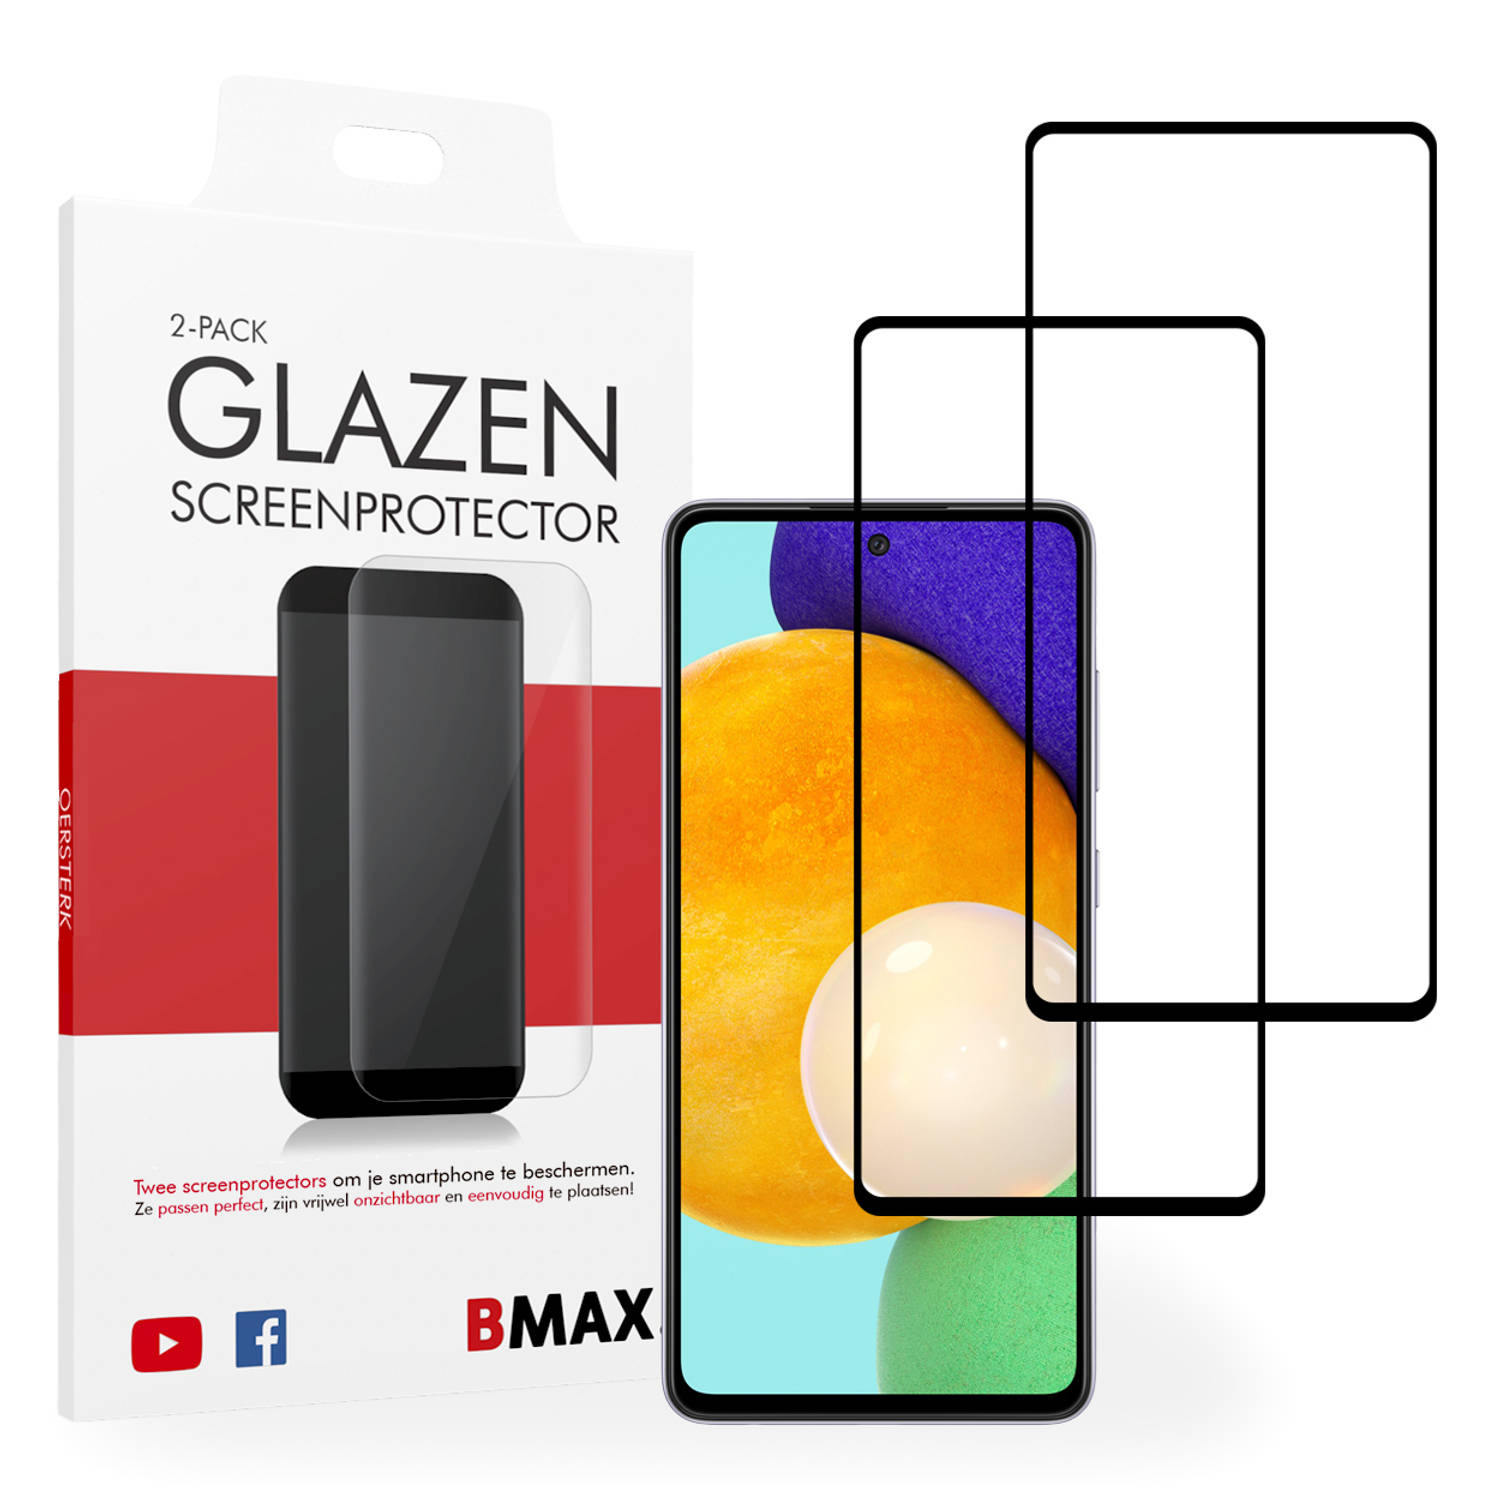 2-pack BMAX Samsung Galaxy A52 Glazen Screenprotector / Full Cover gehard glas / Beschermglas / Tempered Glass / Glasplaatje - Zwart